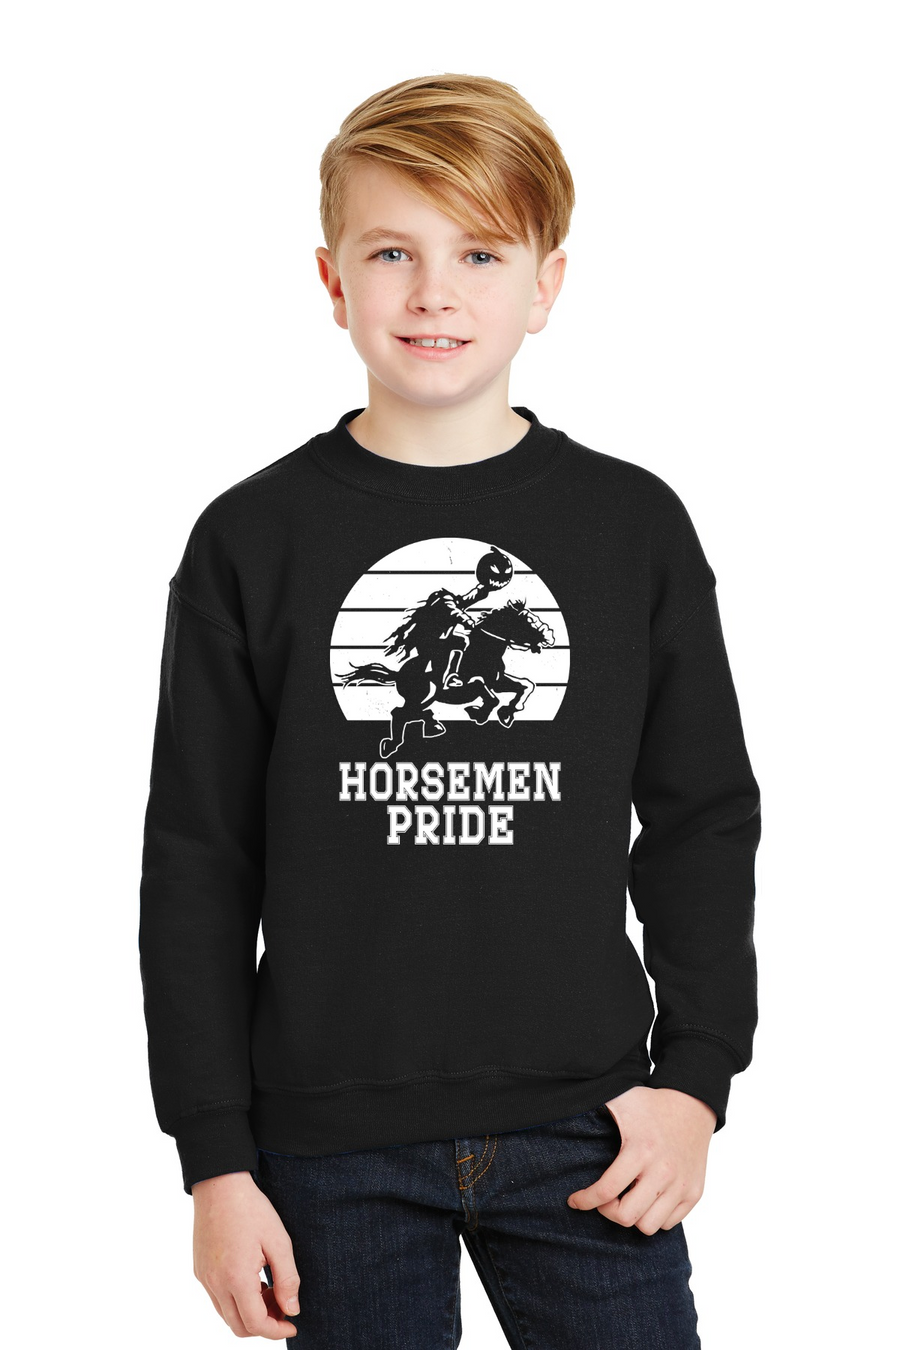 Sleepy Hollow Horsemen PTA 2023/24 Spirit Wear On-Demand-Unisex Crewneck Sweatshirt